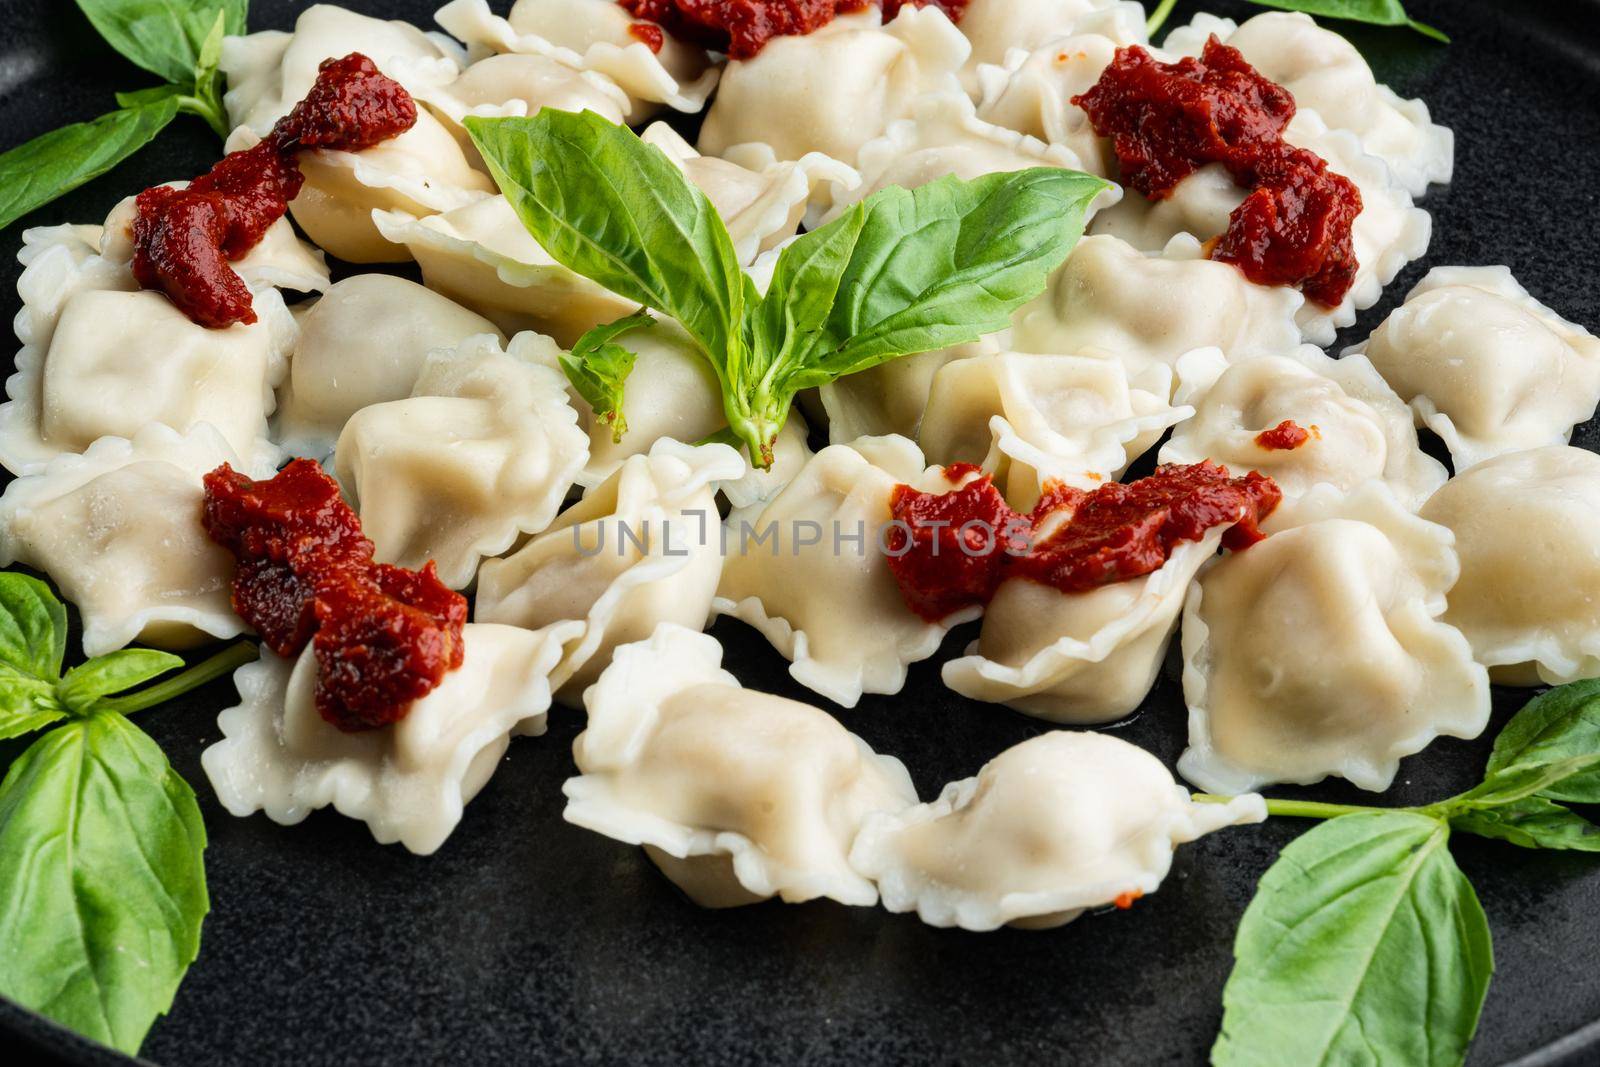 Ravioli pasta with mushroom cream sauce and cheese - Italian food style set with basil parmesan and tomatoe on black plate, on black background